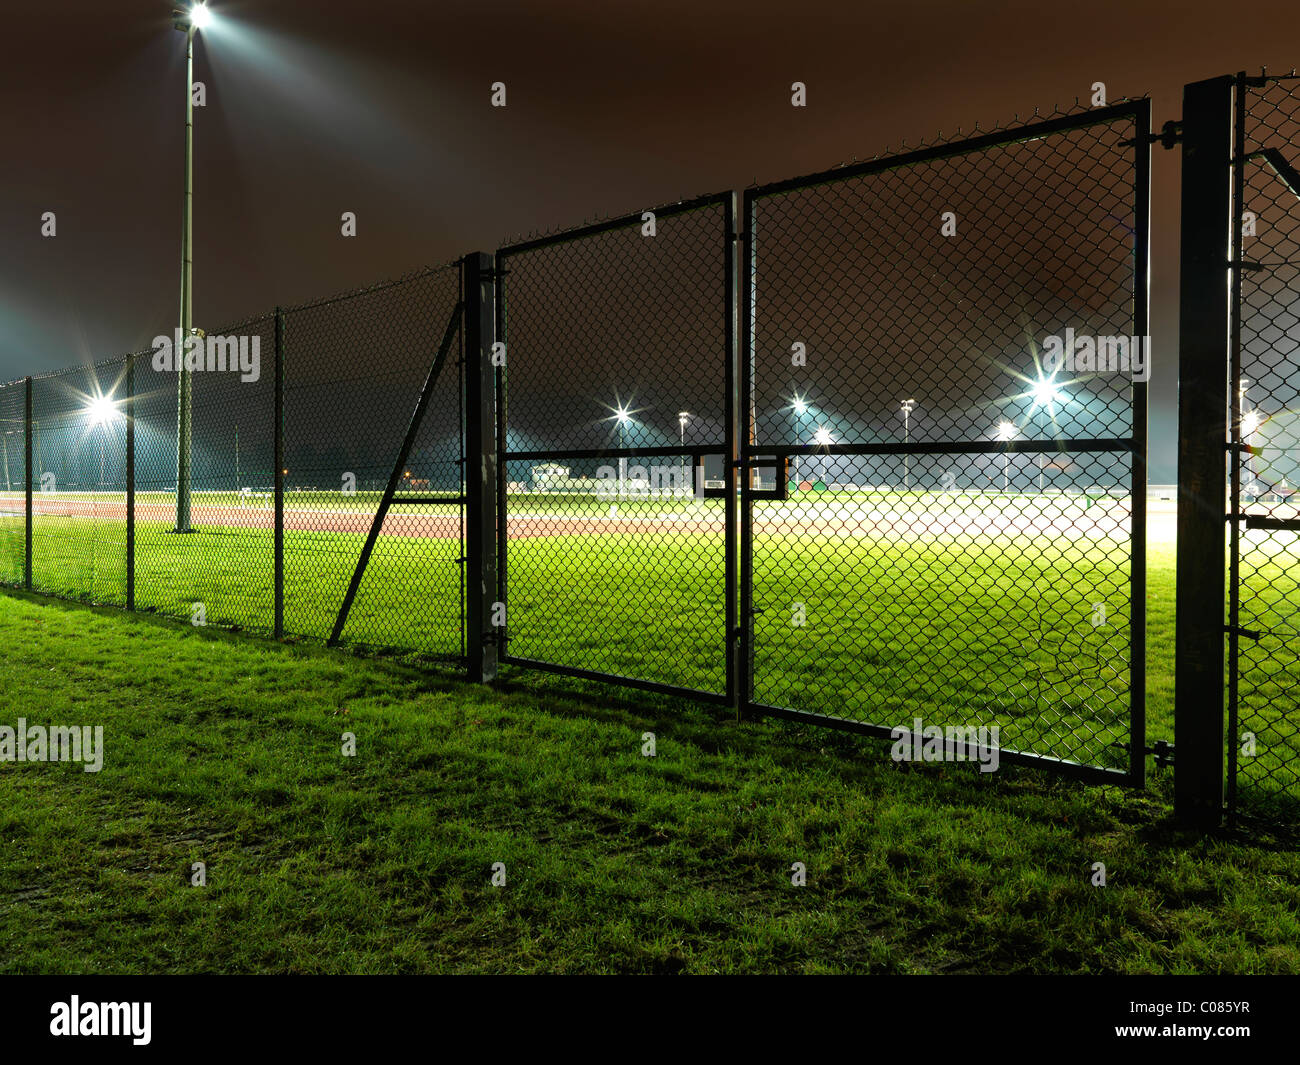 Sports ground floodlit at night Stock Photo